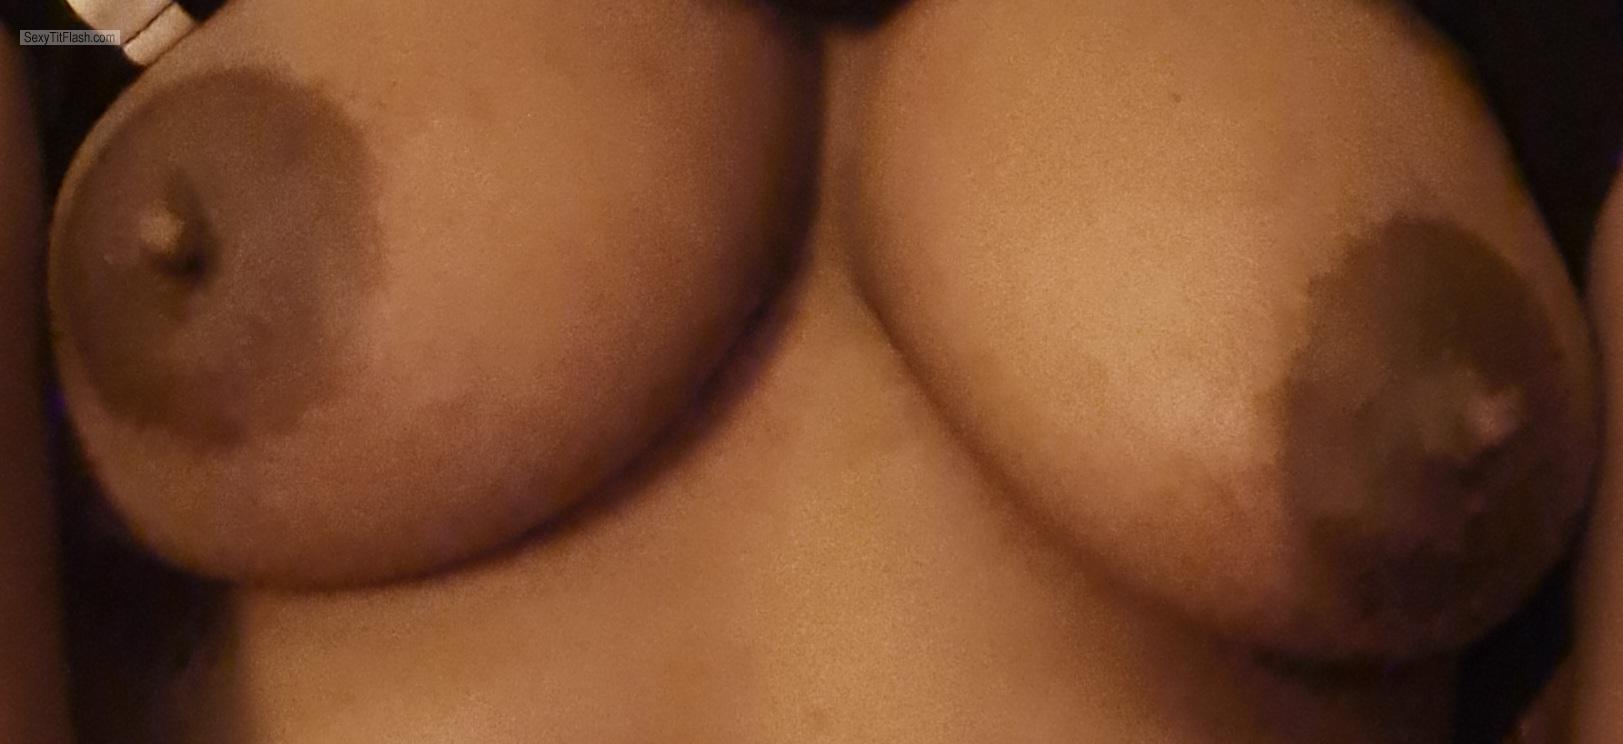 My Big Tits Selfie by Busty Slut